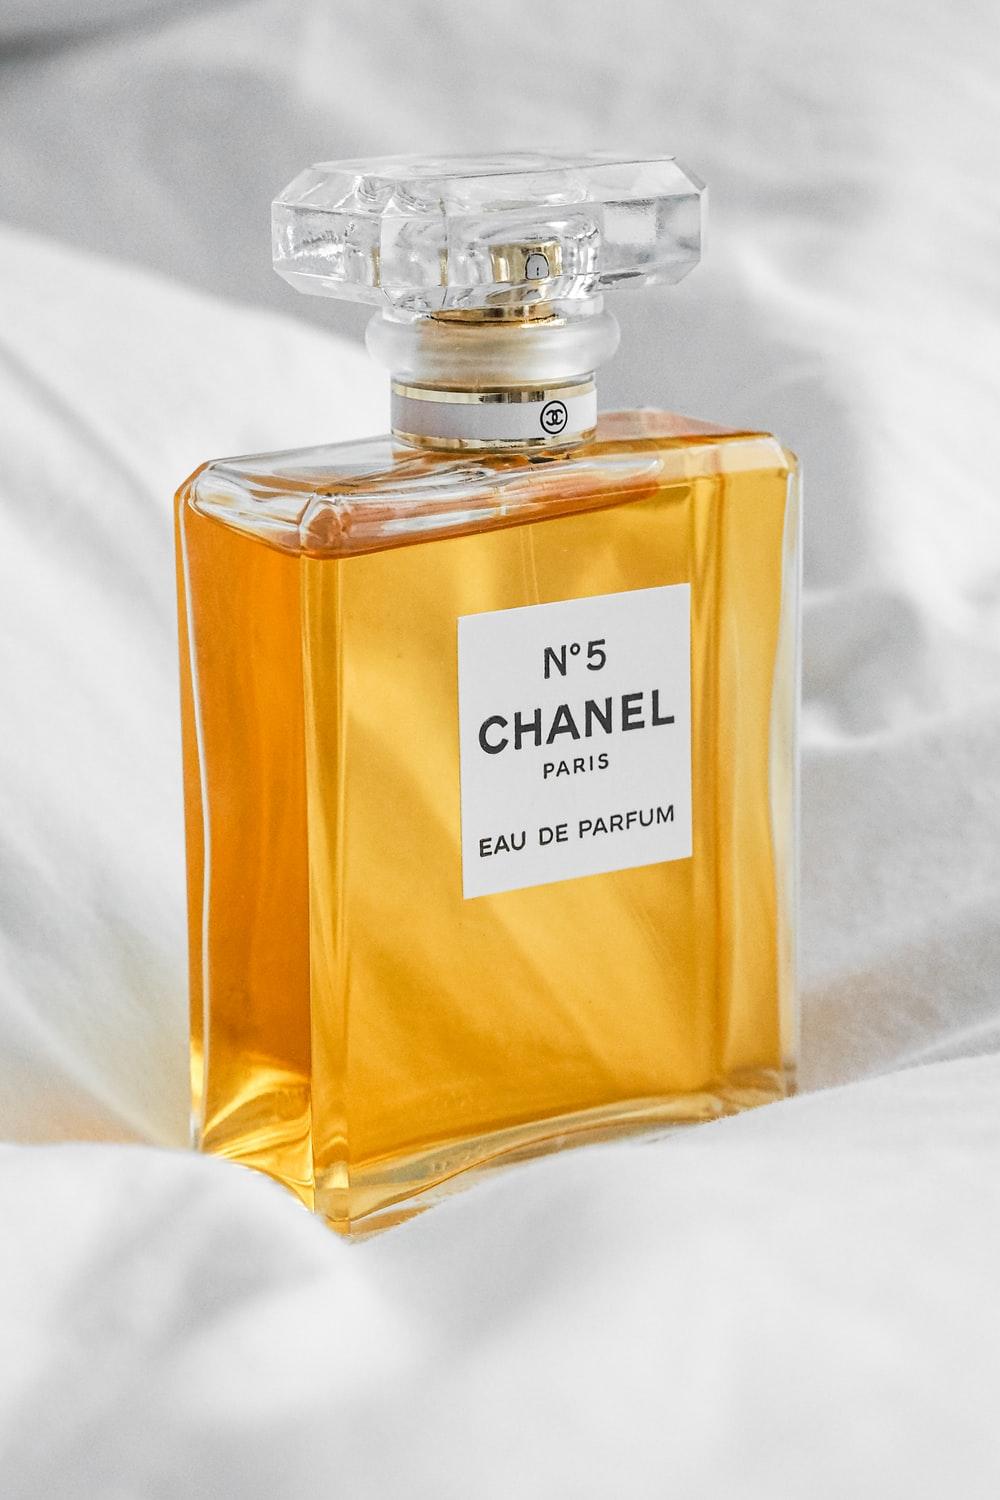 Chia sẻ hơn 55 về chanel mademoiselle perfume gift set hay nhất   cdgdbentreeduvn